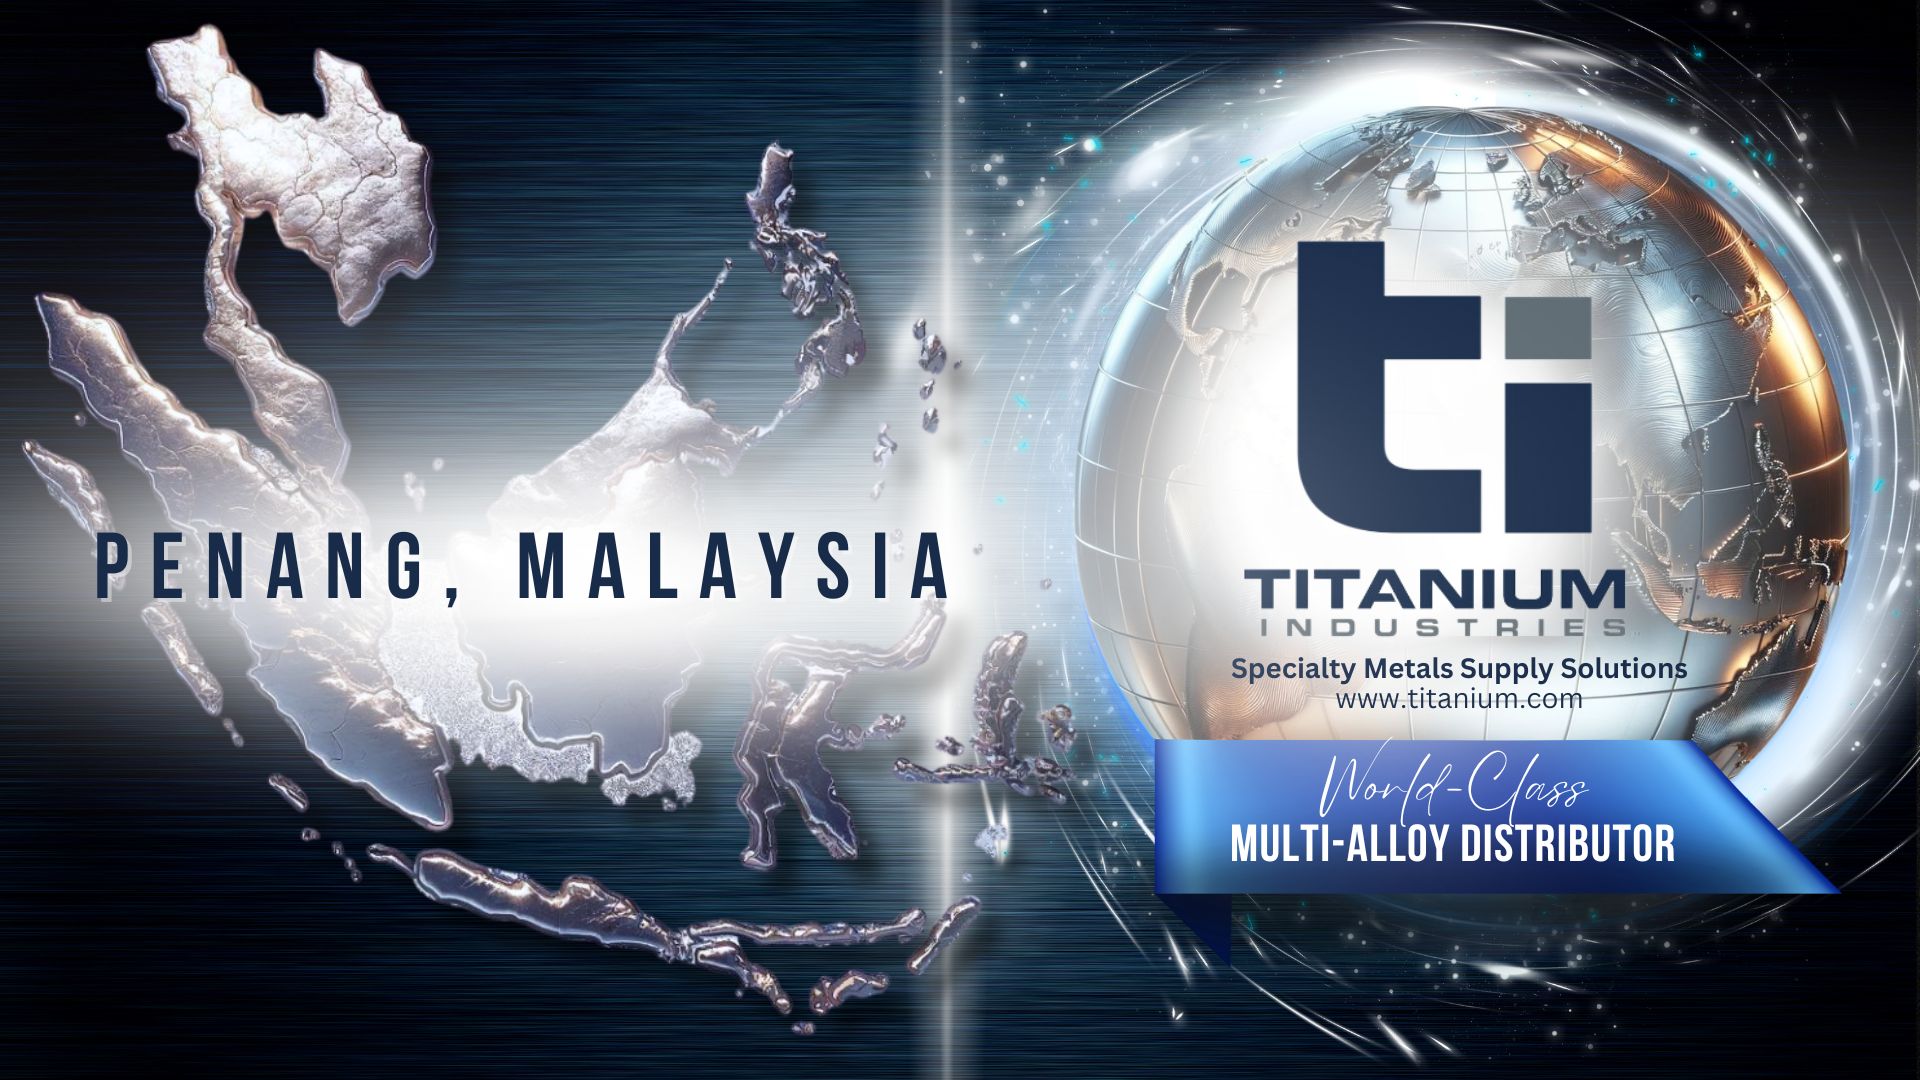 Titanium Industries Southeast Asia Sdn Bhd. Penang, Malaysia